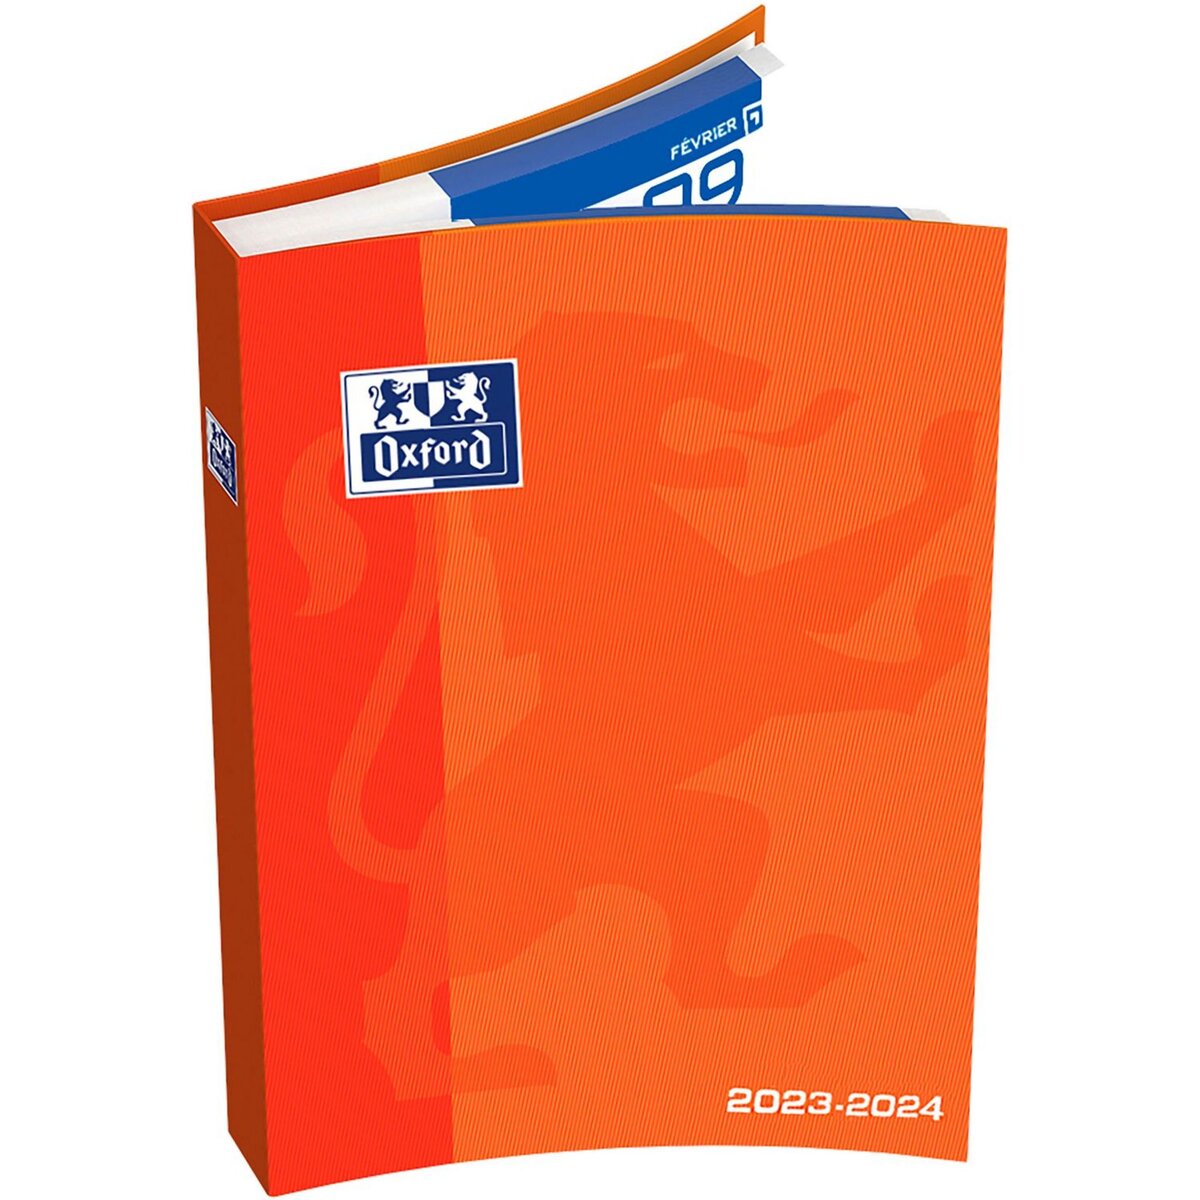 OXFORD Agenda scolaire journalier grand format orange 2023-2024 pas cher 